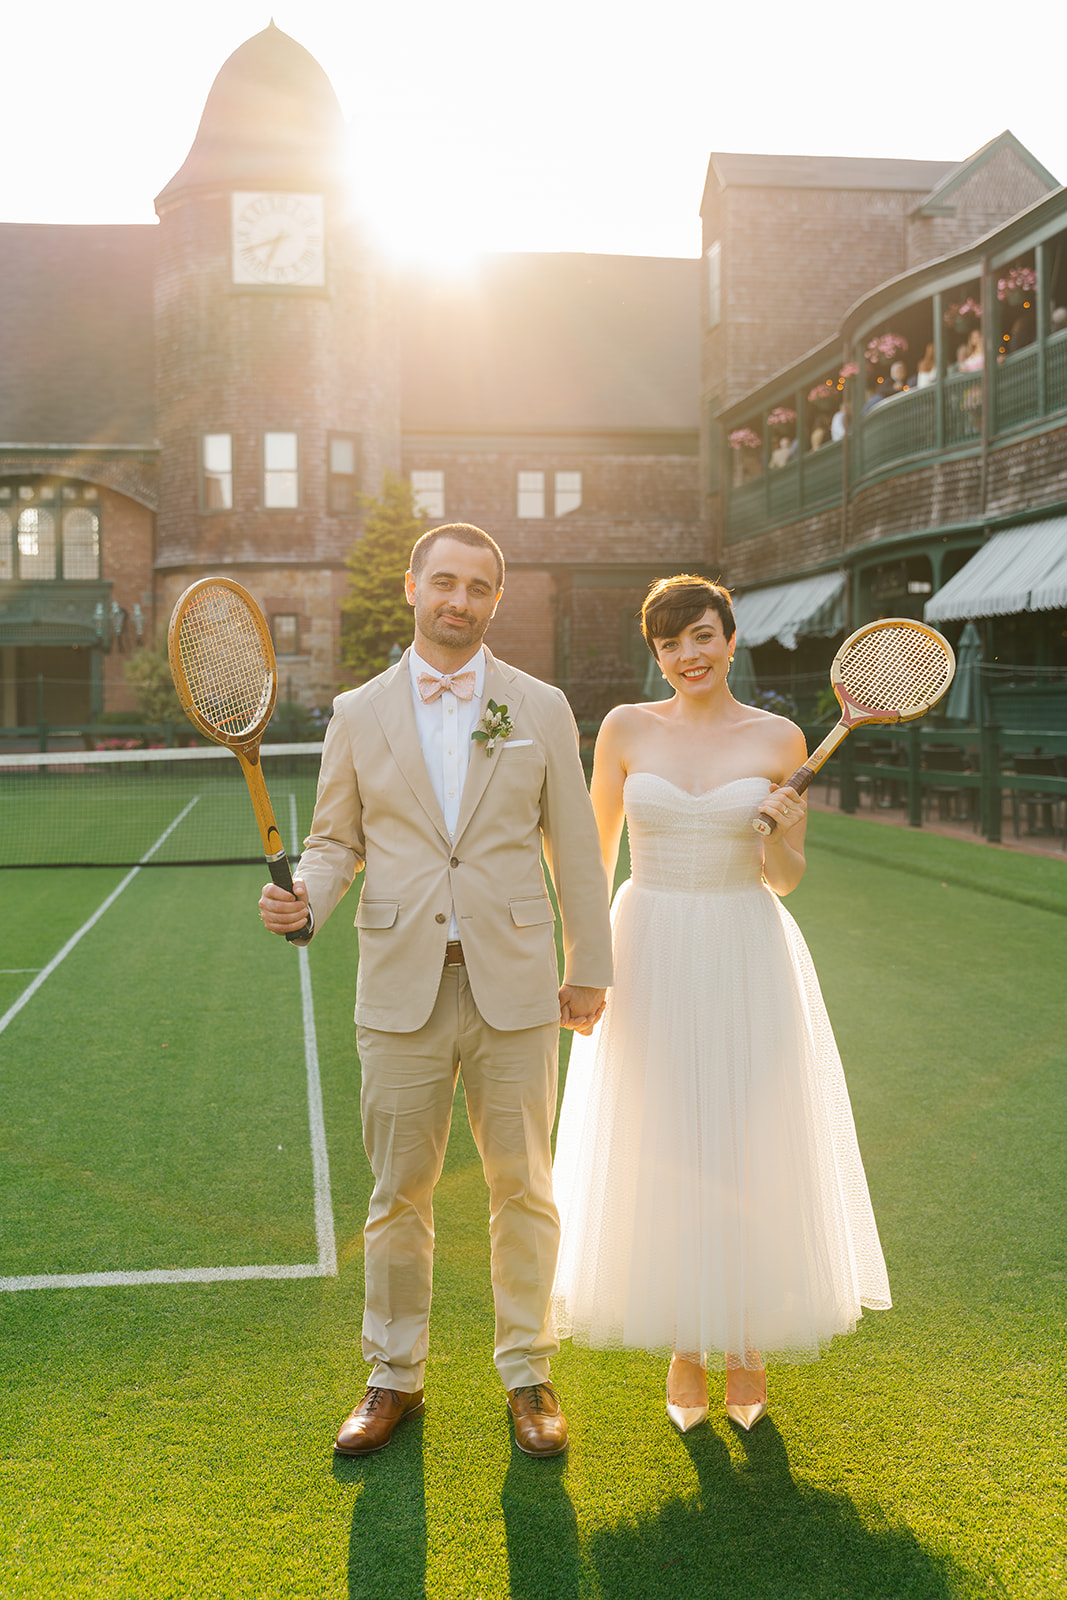 Vintage tennis inspired wedding